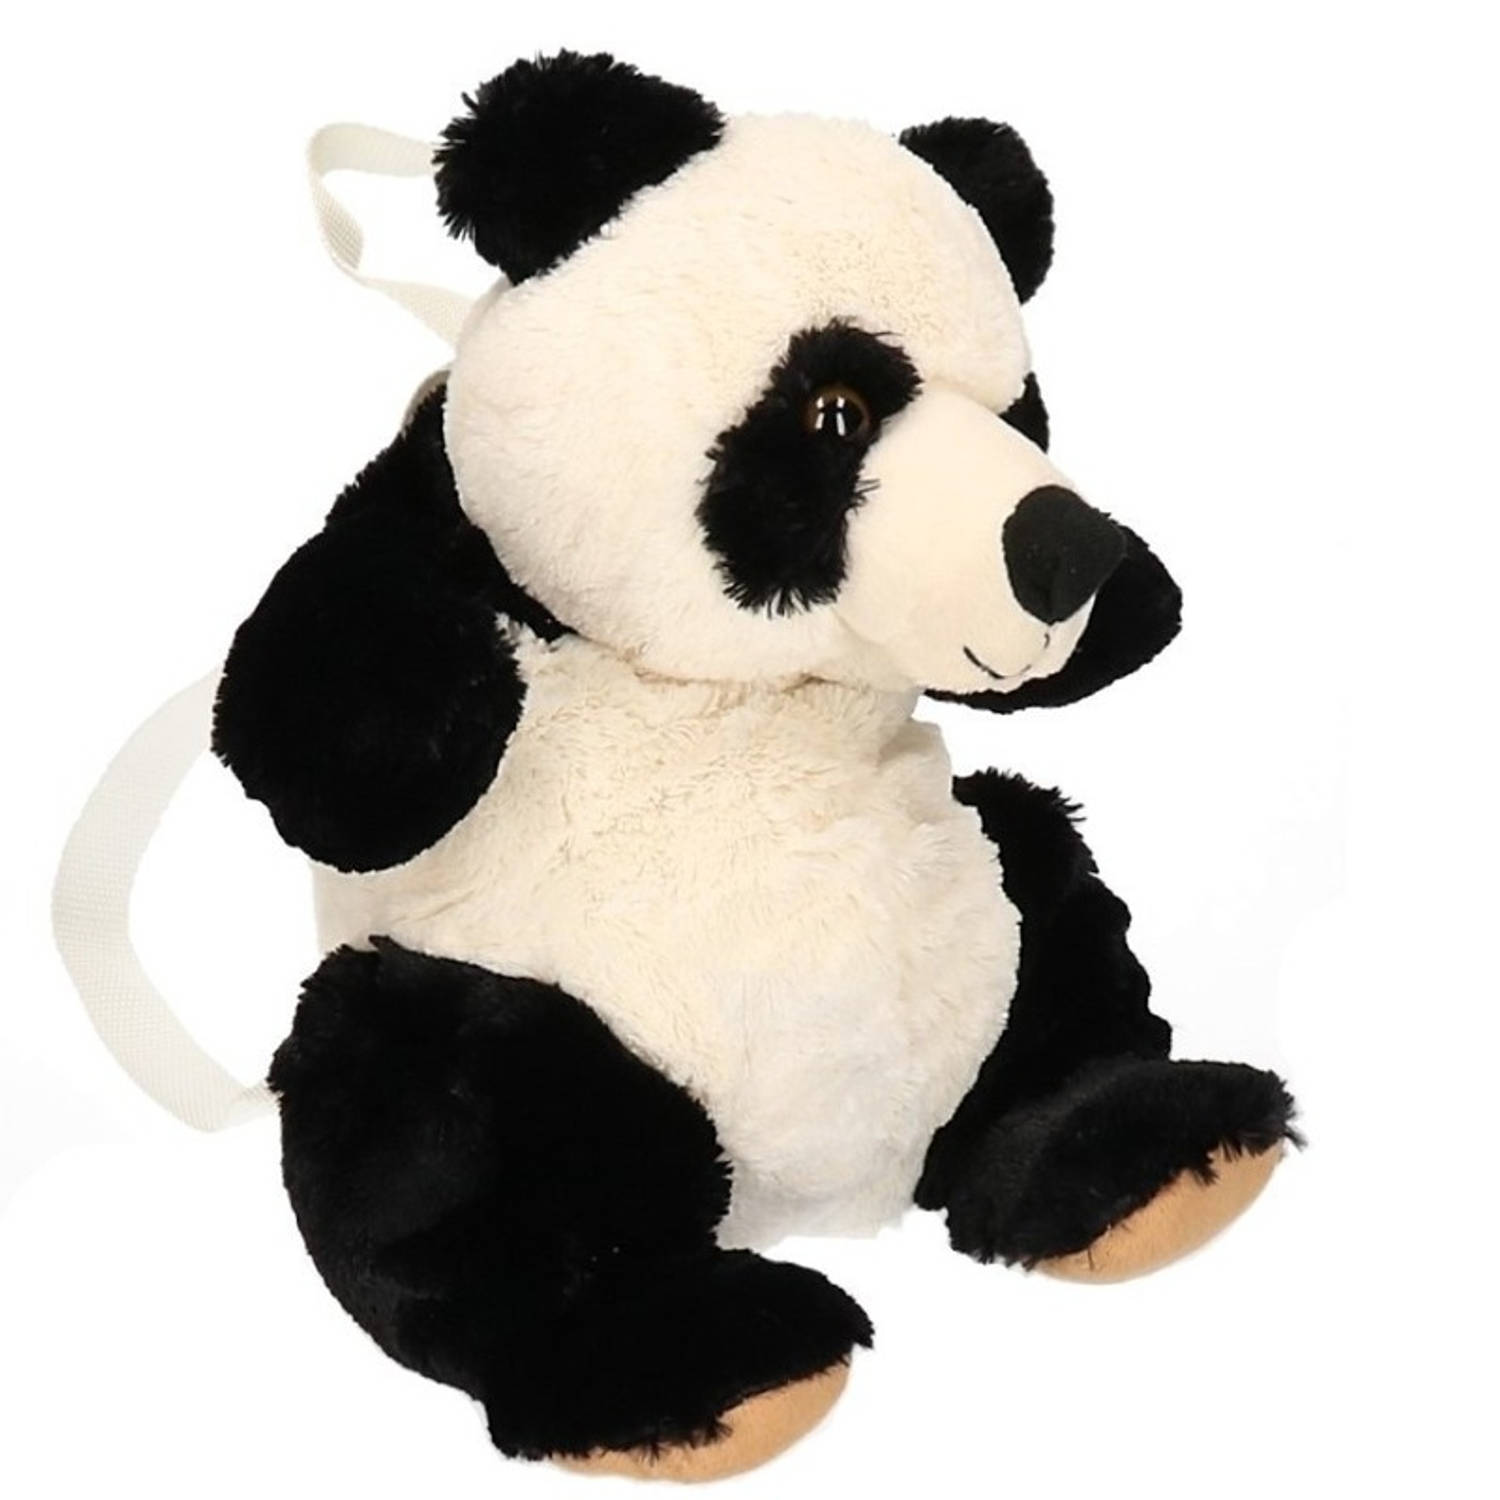 Pluche panda beer rugzak knuffel 22 cm